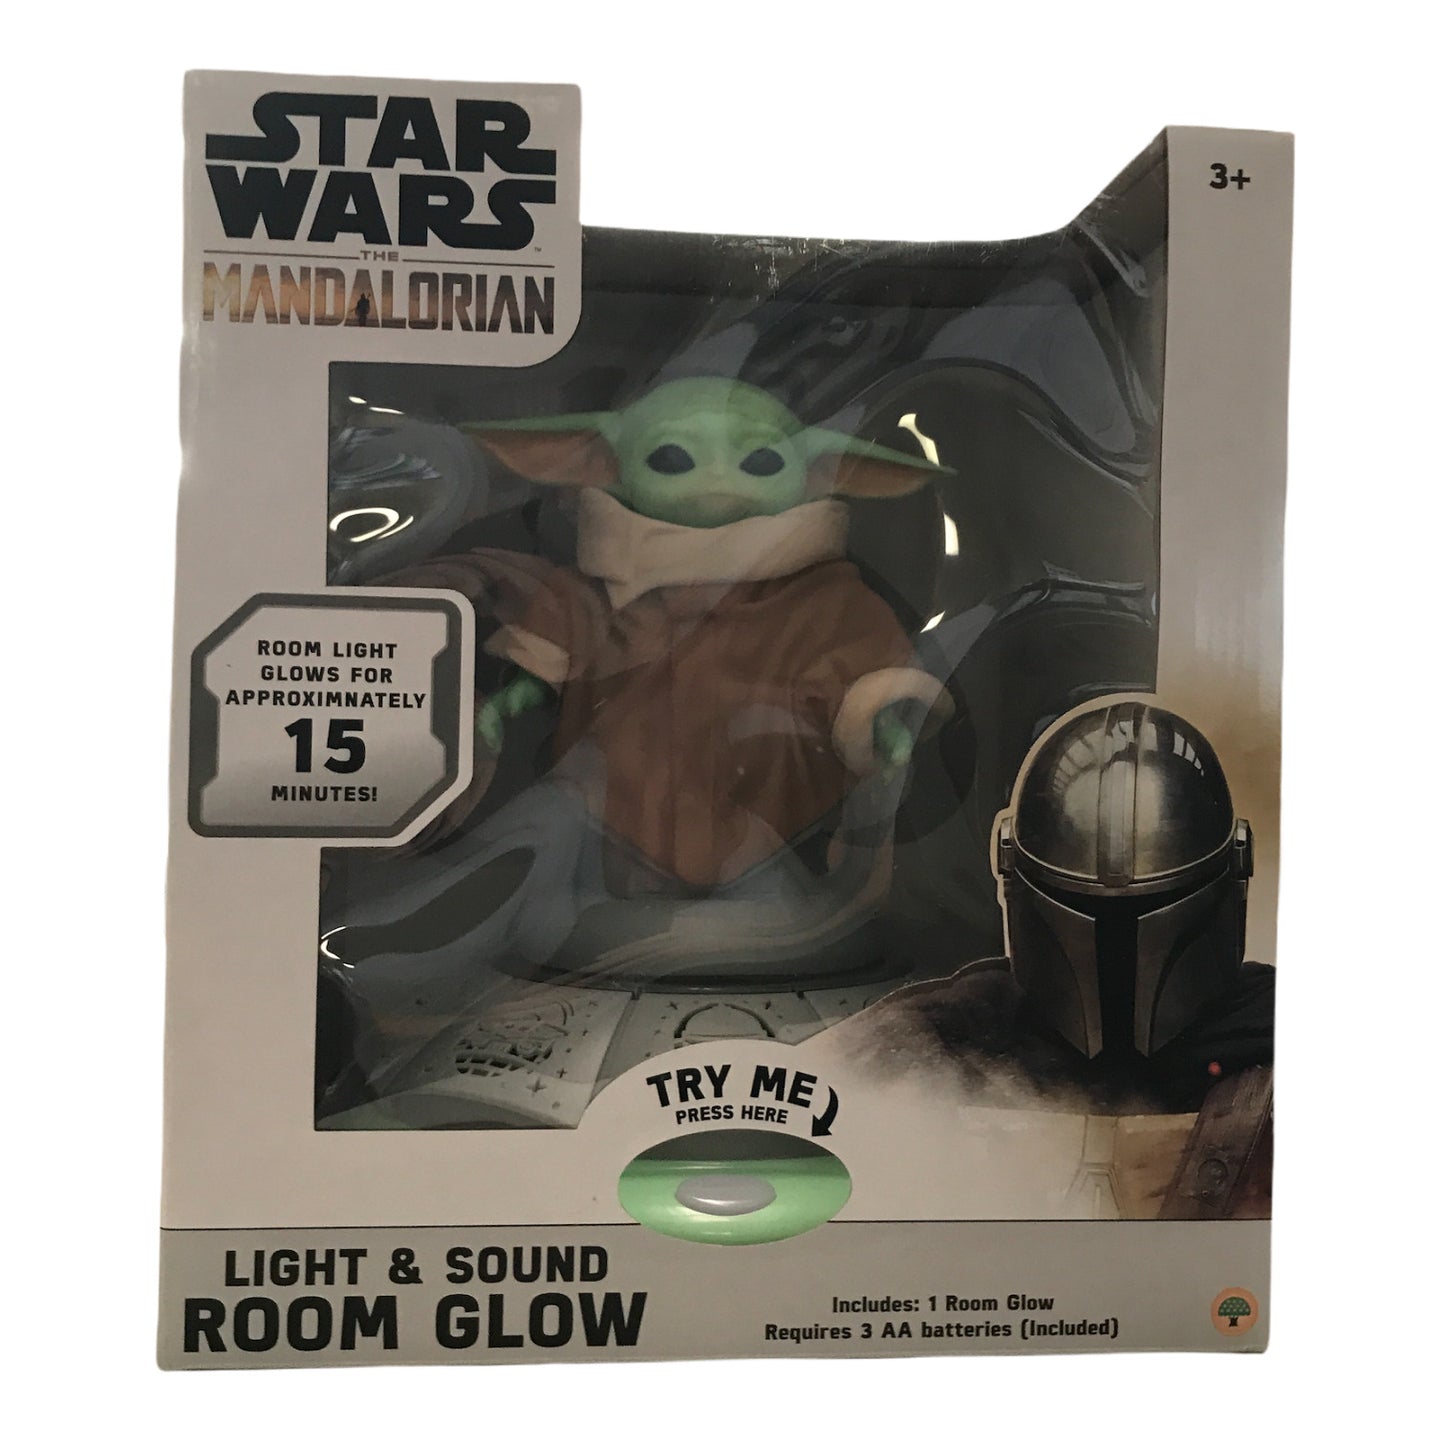 Disney Star Wars the Mandalorian Light & Sound Talking Room Glow Nightlight